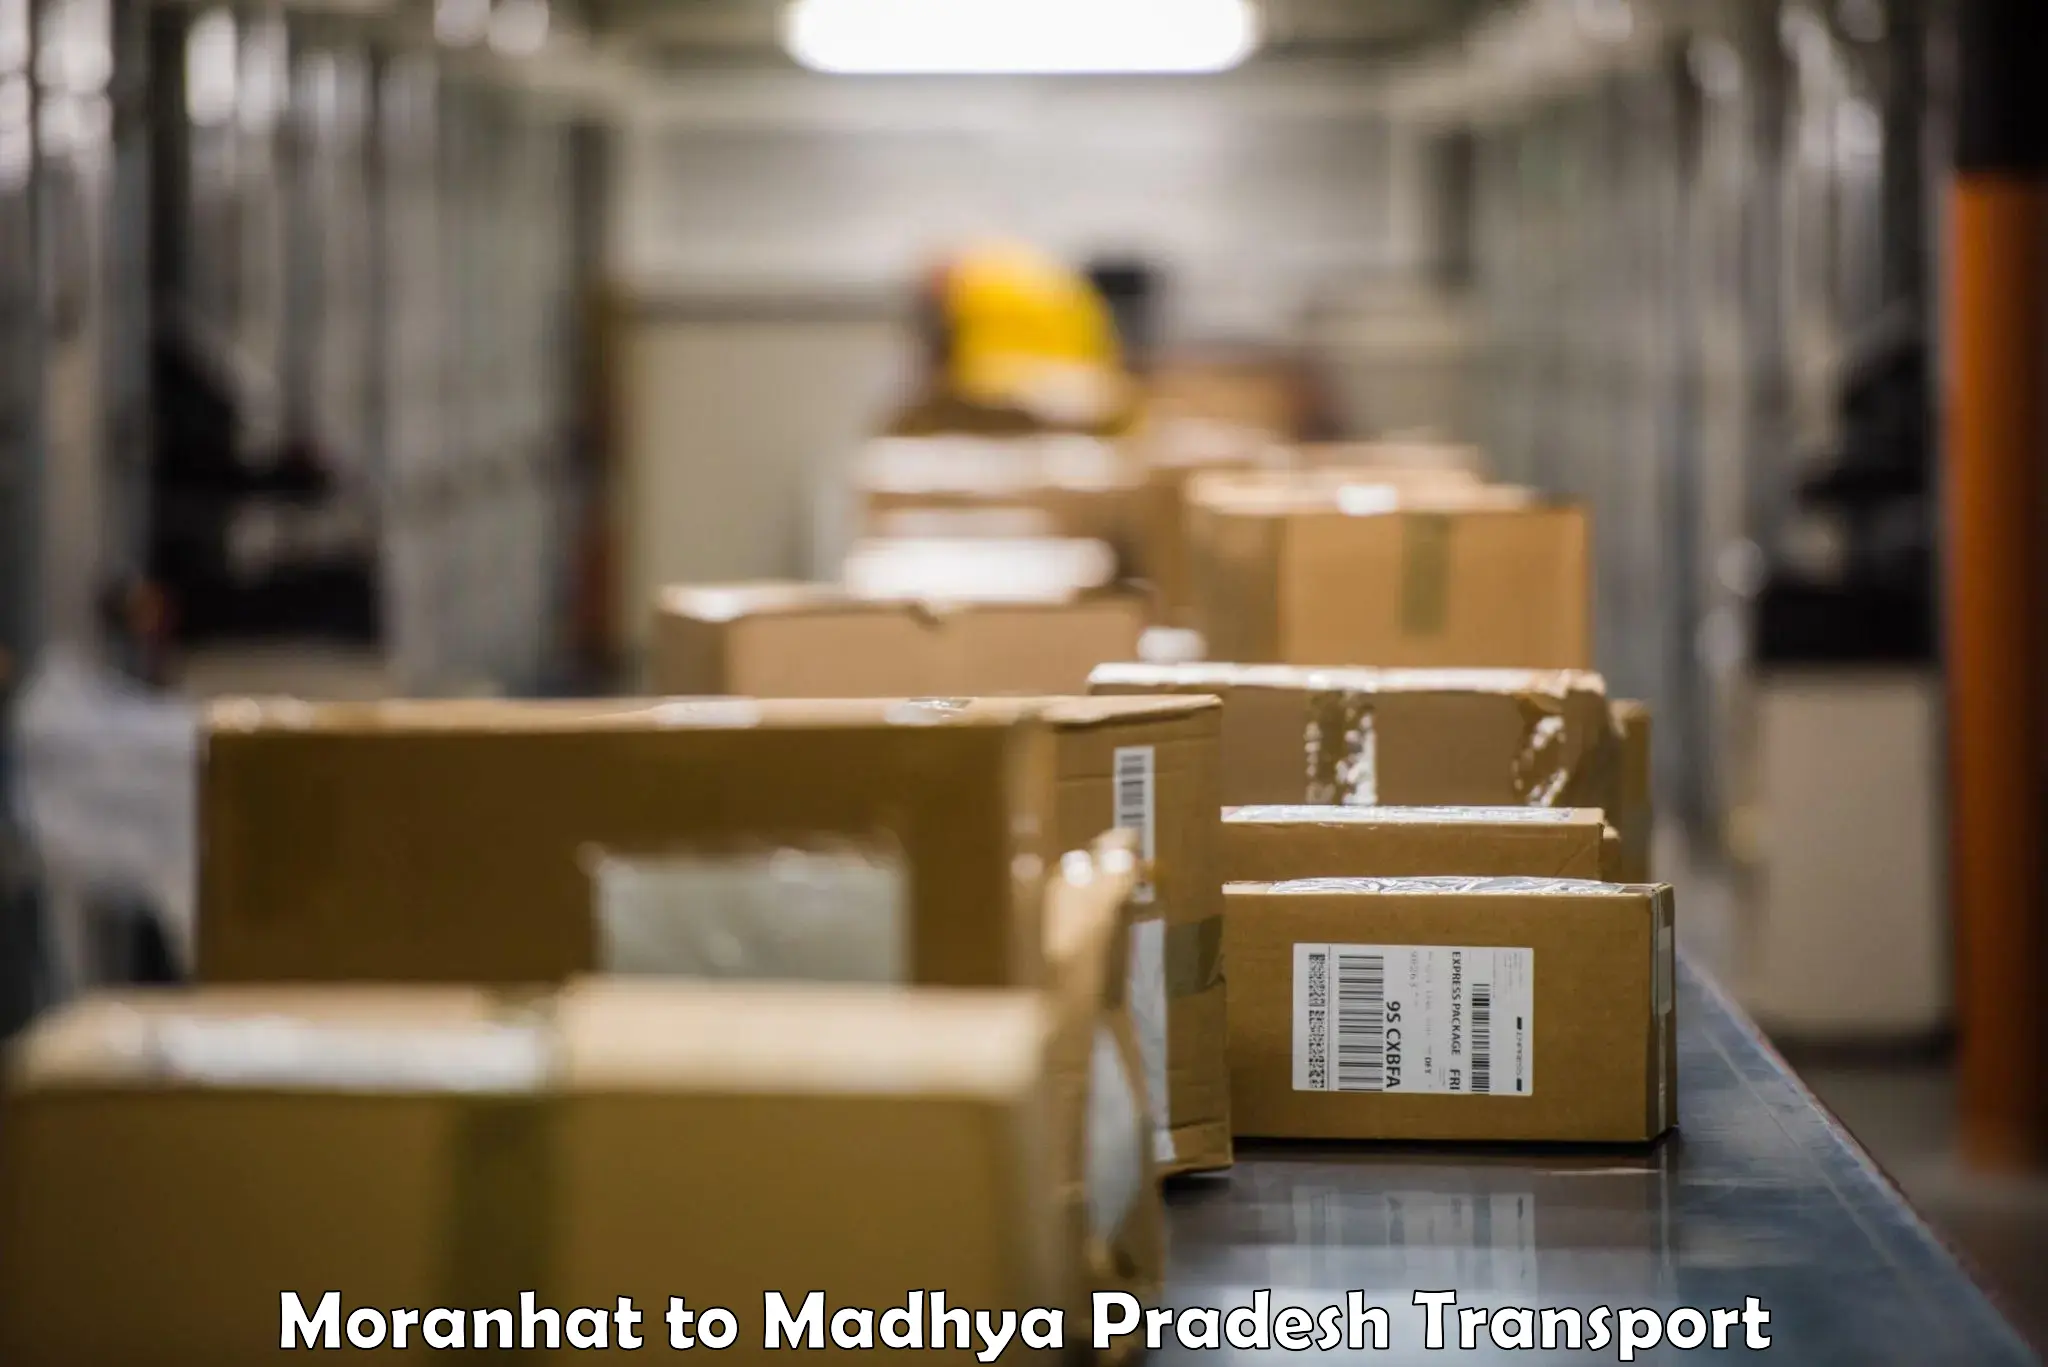 Shipping partner Moranhat to Amarkantak